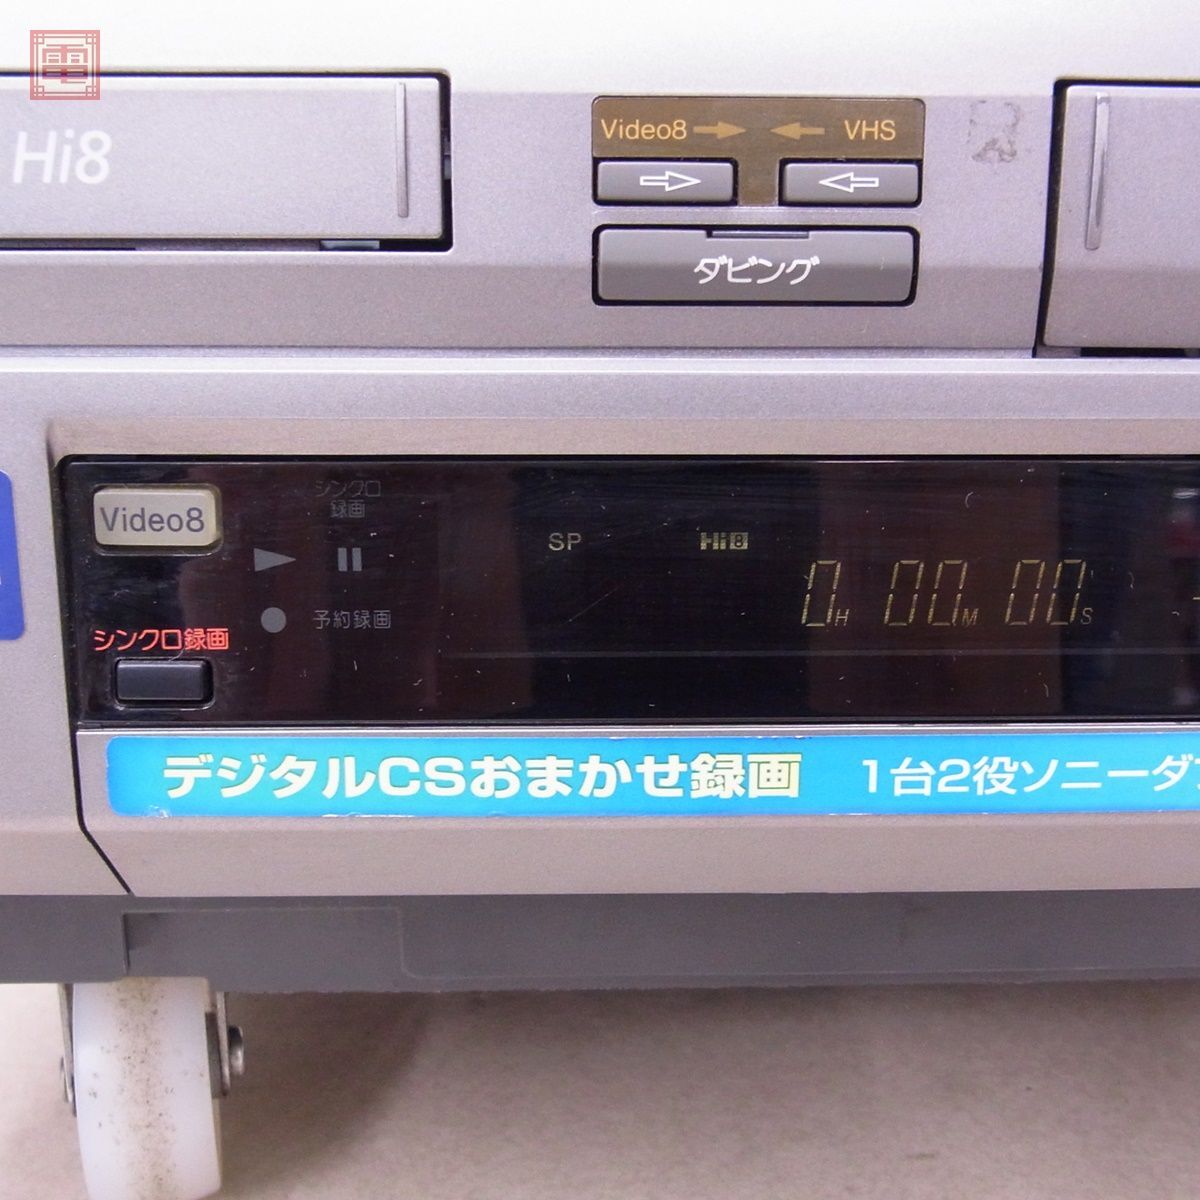 *SONY video cassette recorder WV-H5 Hi8 VHS double video video deck VIDEO RECORDER Sony electrification only verification [40